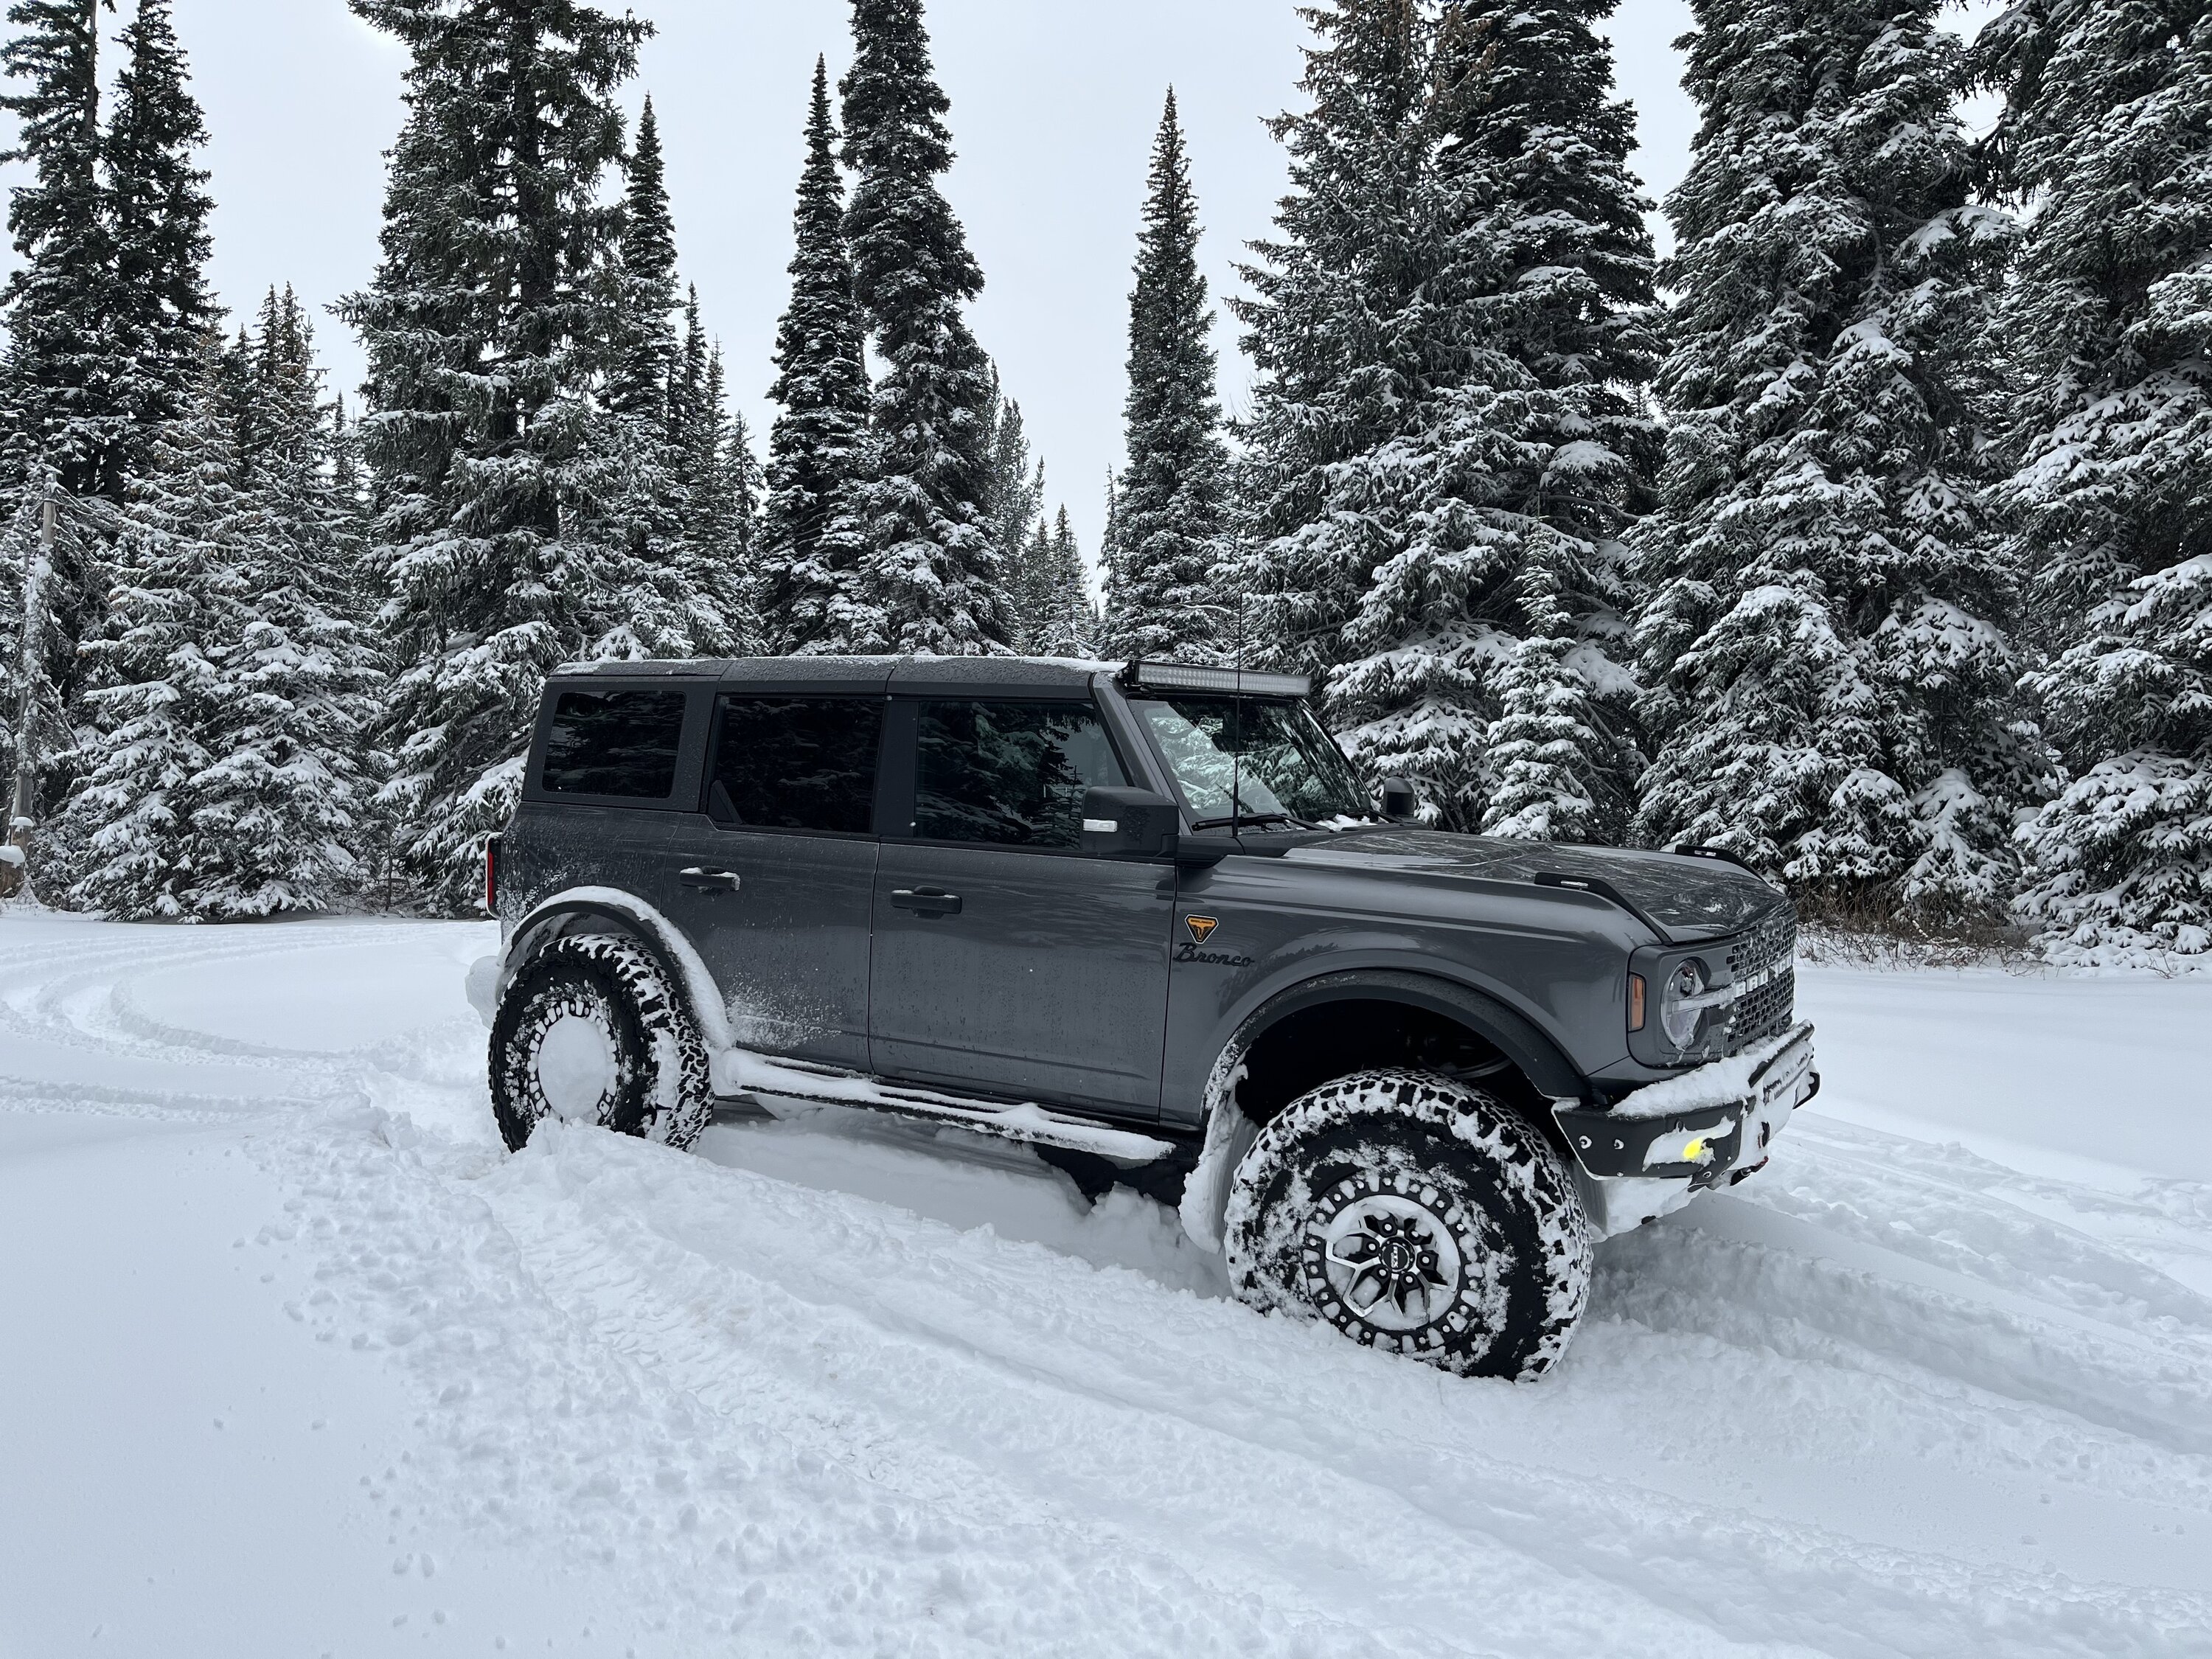 Ford Bronco Snow Wheeling With Bronco & Jeep 06 Nov 2022 IMG_0697.JPG